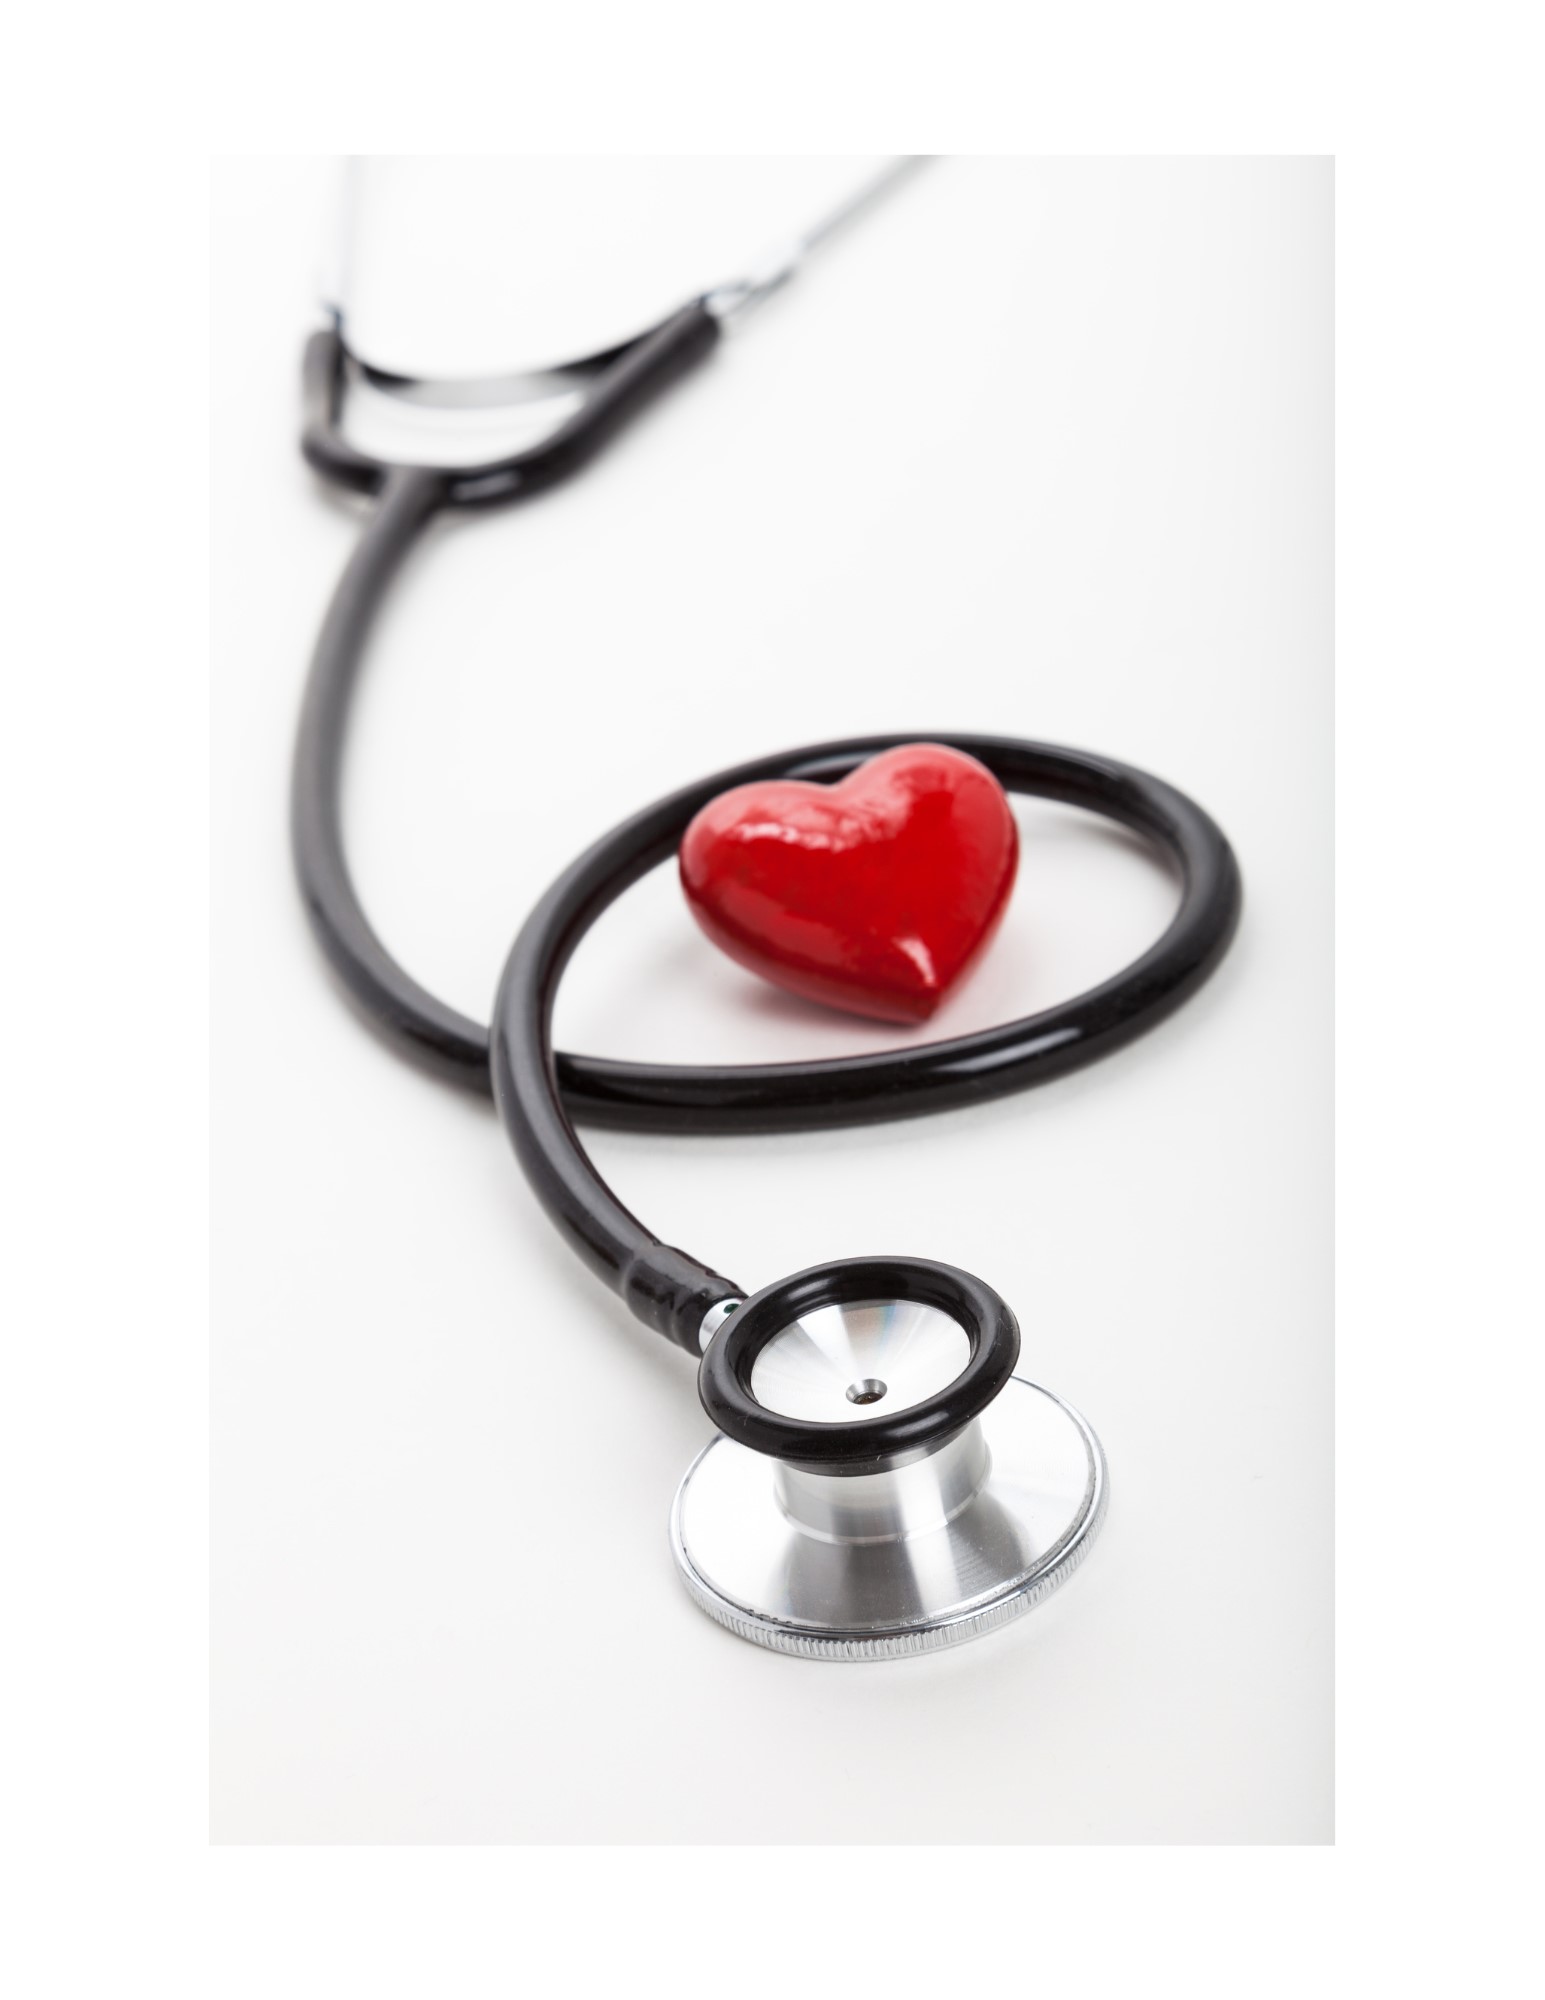 Stethoscope & Heart